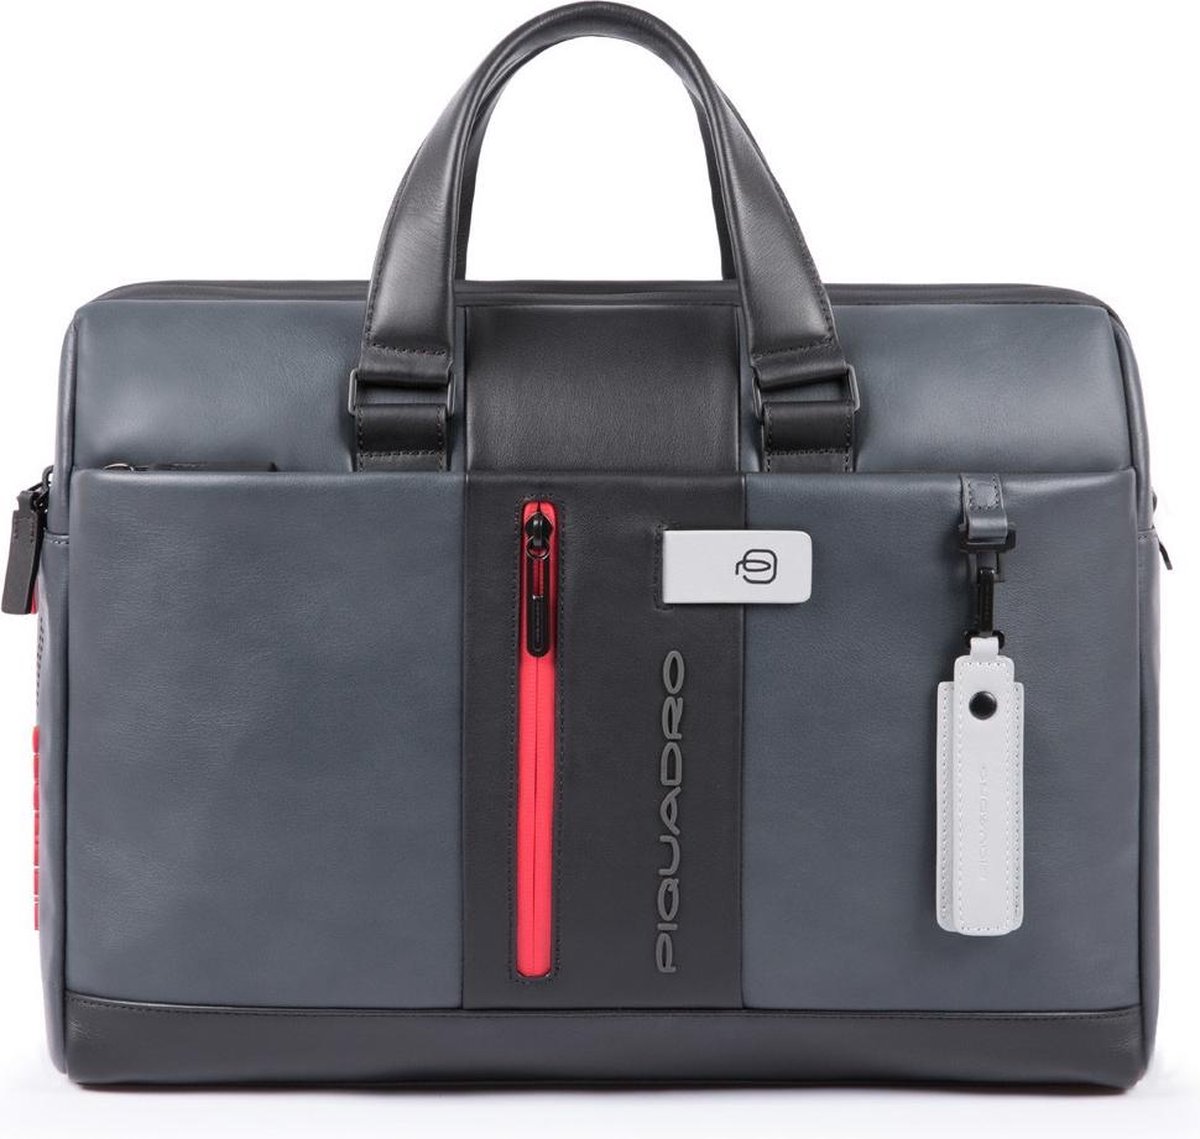 Piquadro Urban Laptop Briefcase 15.6'' Black/Grey